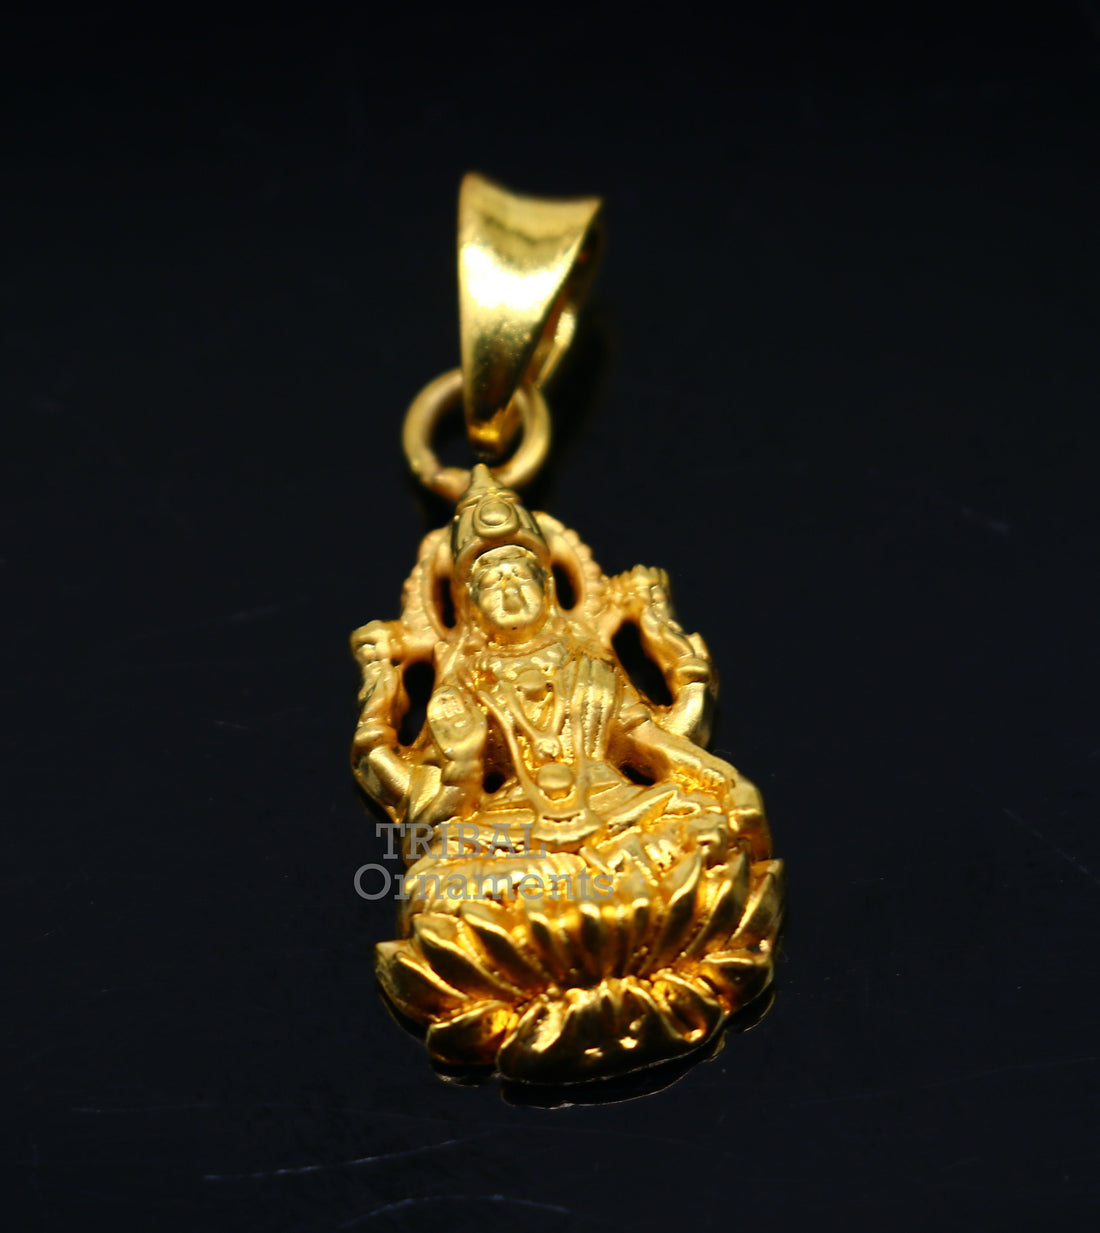 925 sterling silver customized gold polished stylish Goddess Laxmi Pendant, amazing design stunning pendant unisex gifting jewelry nsp466 - TRIBAL ORNAMENTS